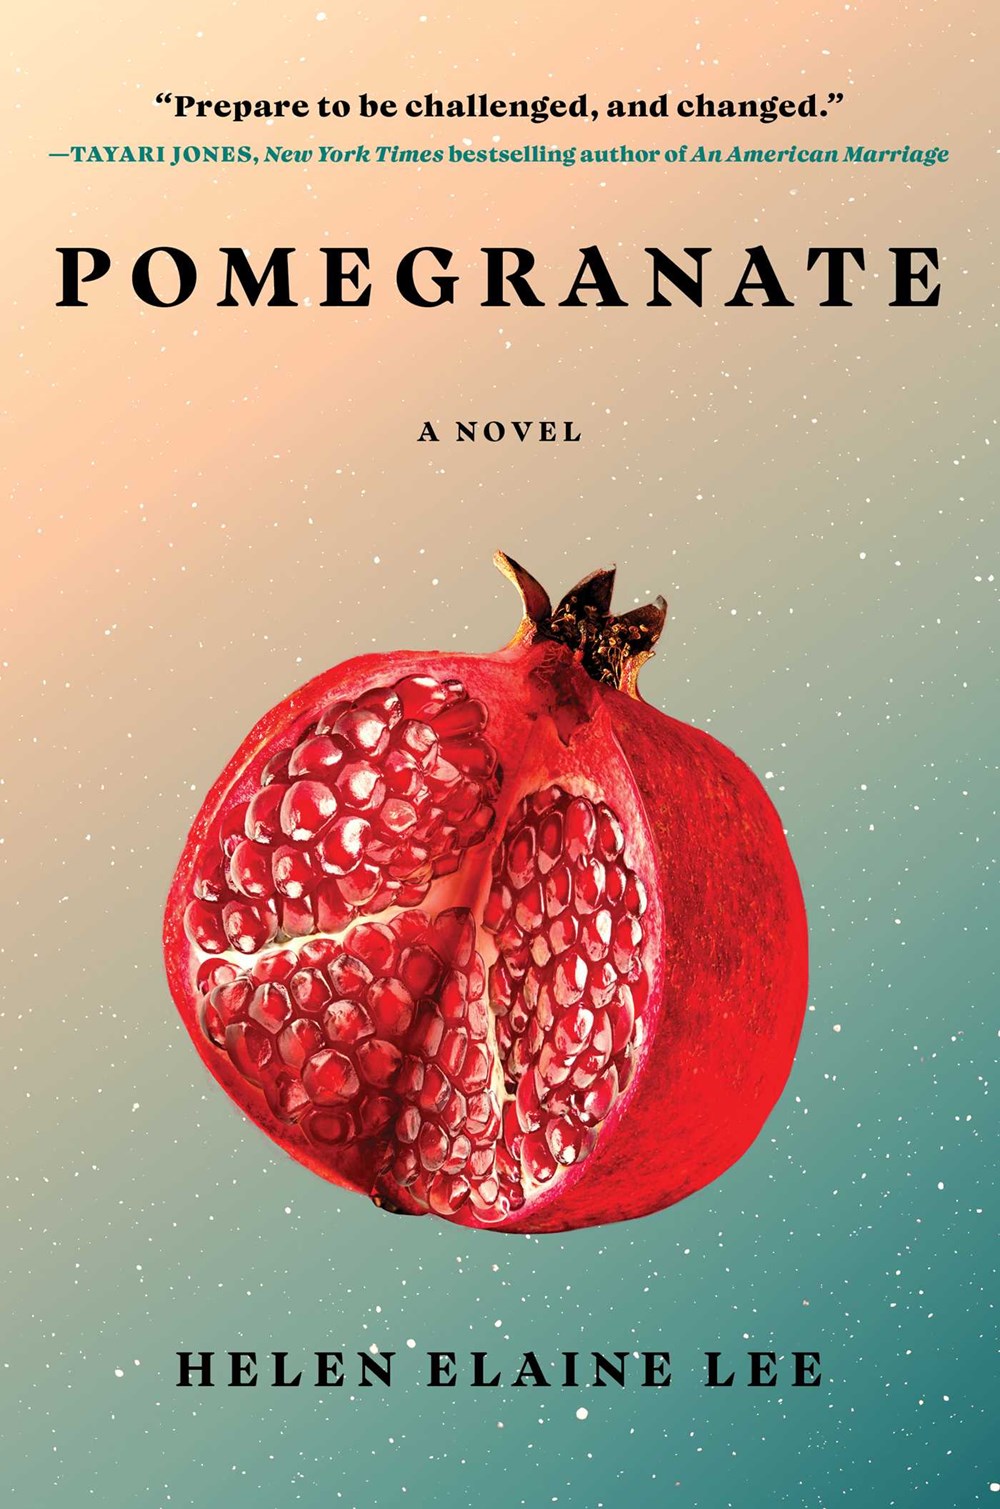 Pomegranate by Helen Elaine Lee